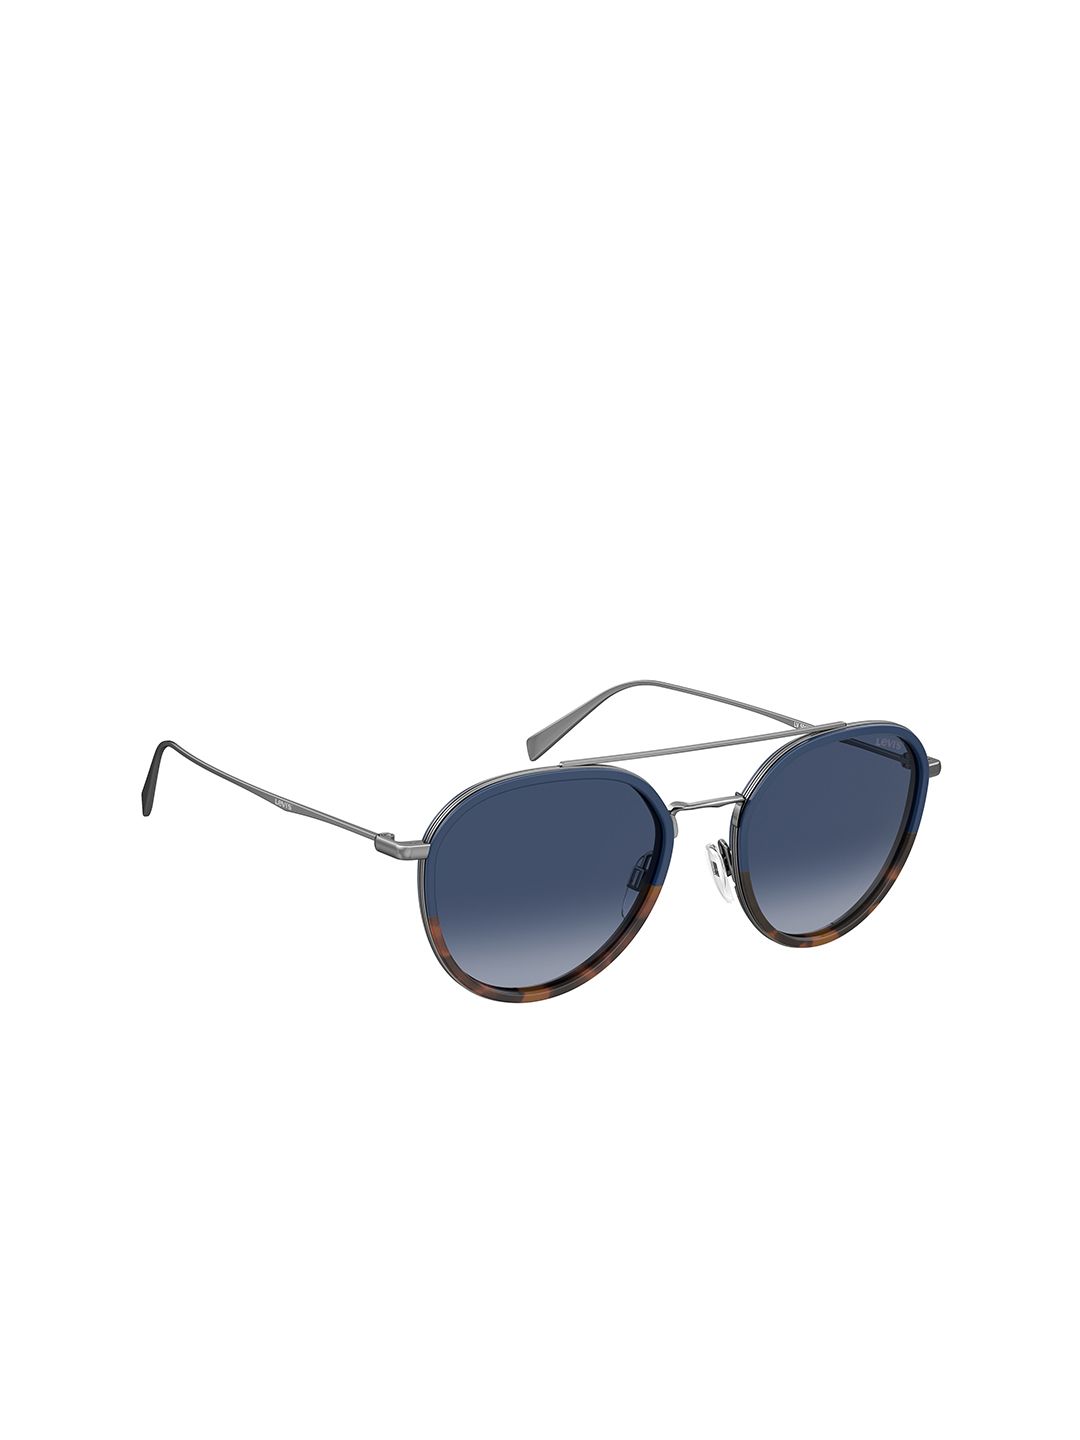 Levis Unisex Grey Lens & Blue Round UV Protected Lens Sunglasses Price in India